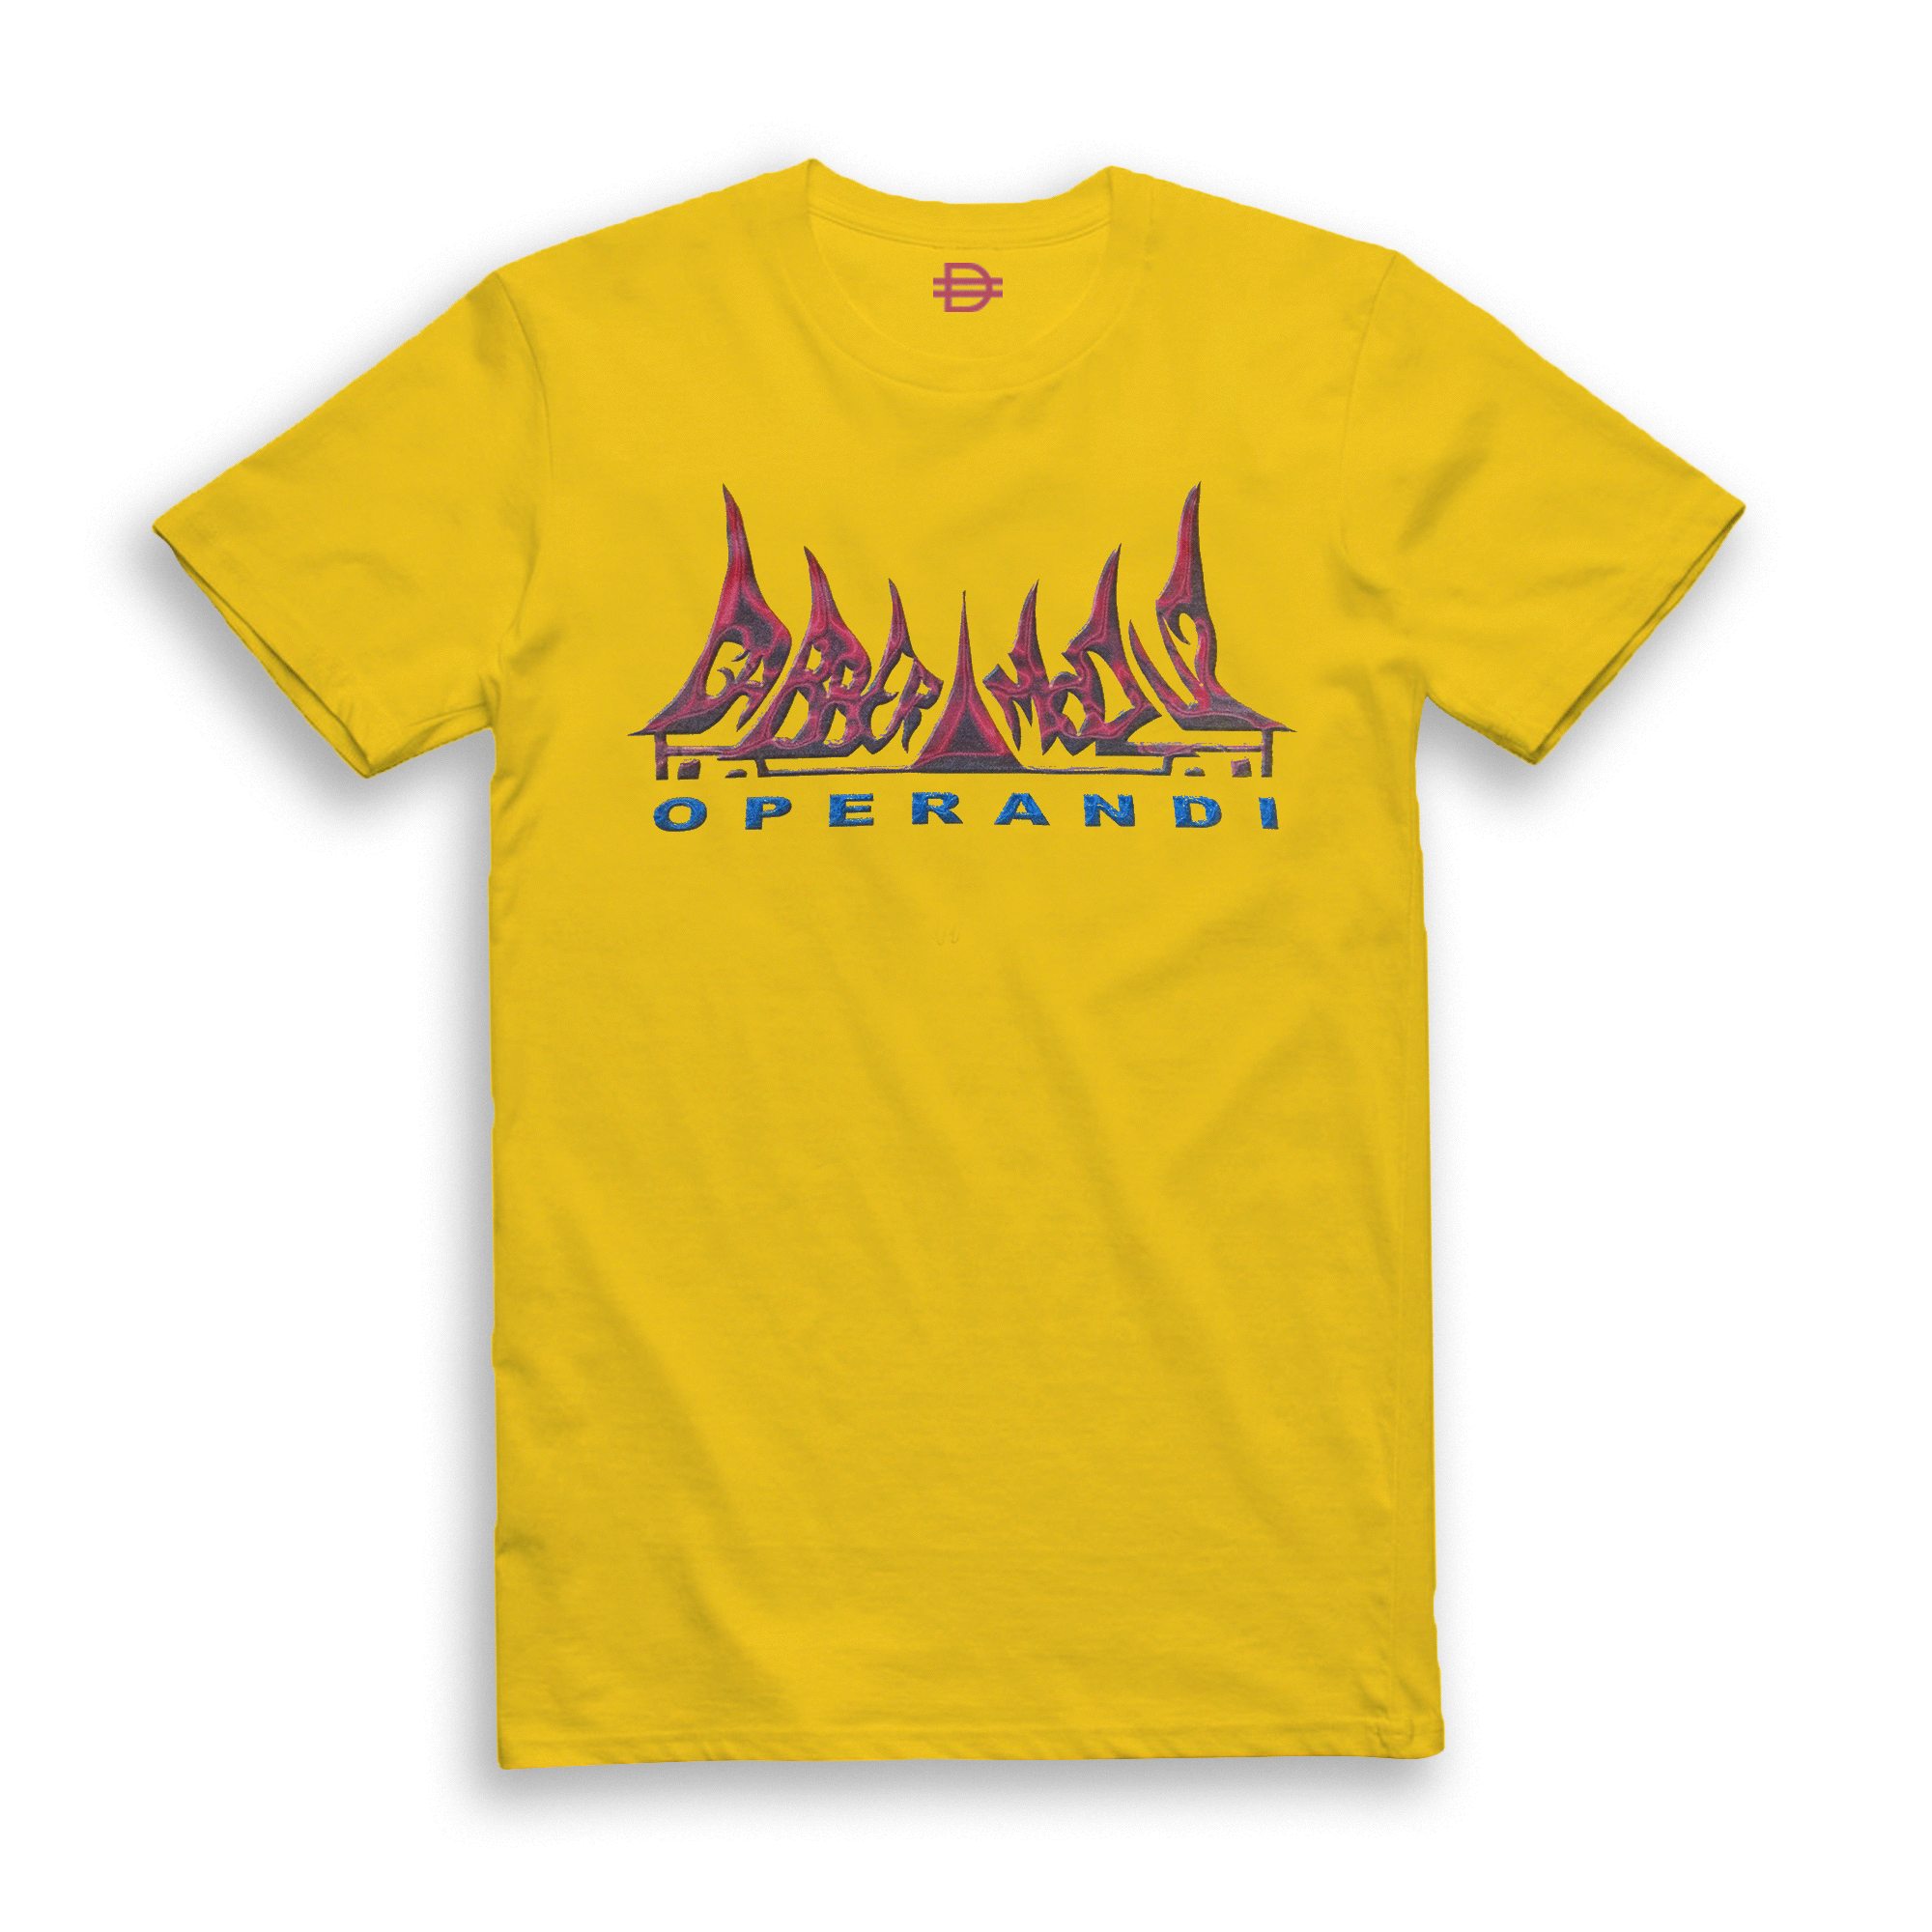 Sinis njo Ponovno sestavlja modous t shirt - burnsyogaandfitness.com